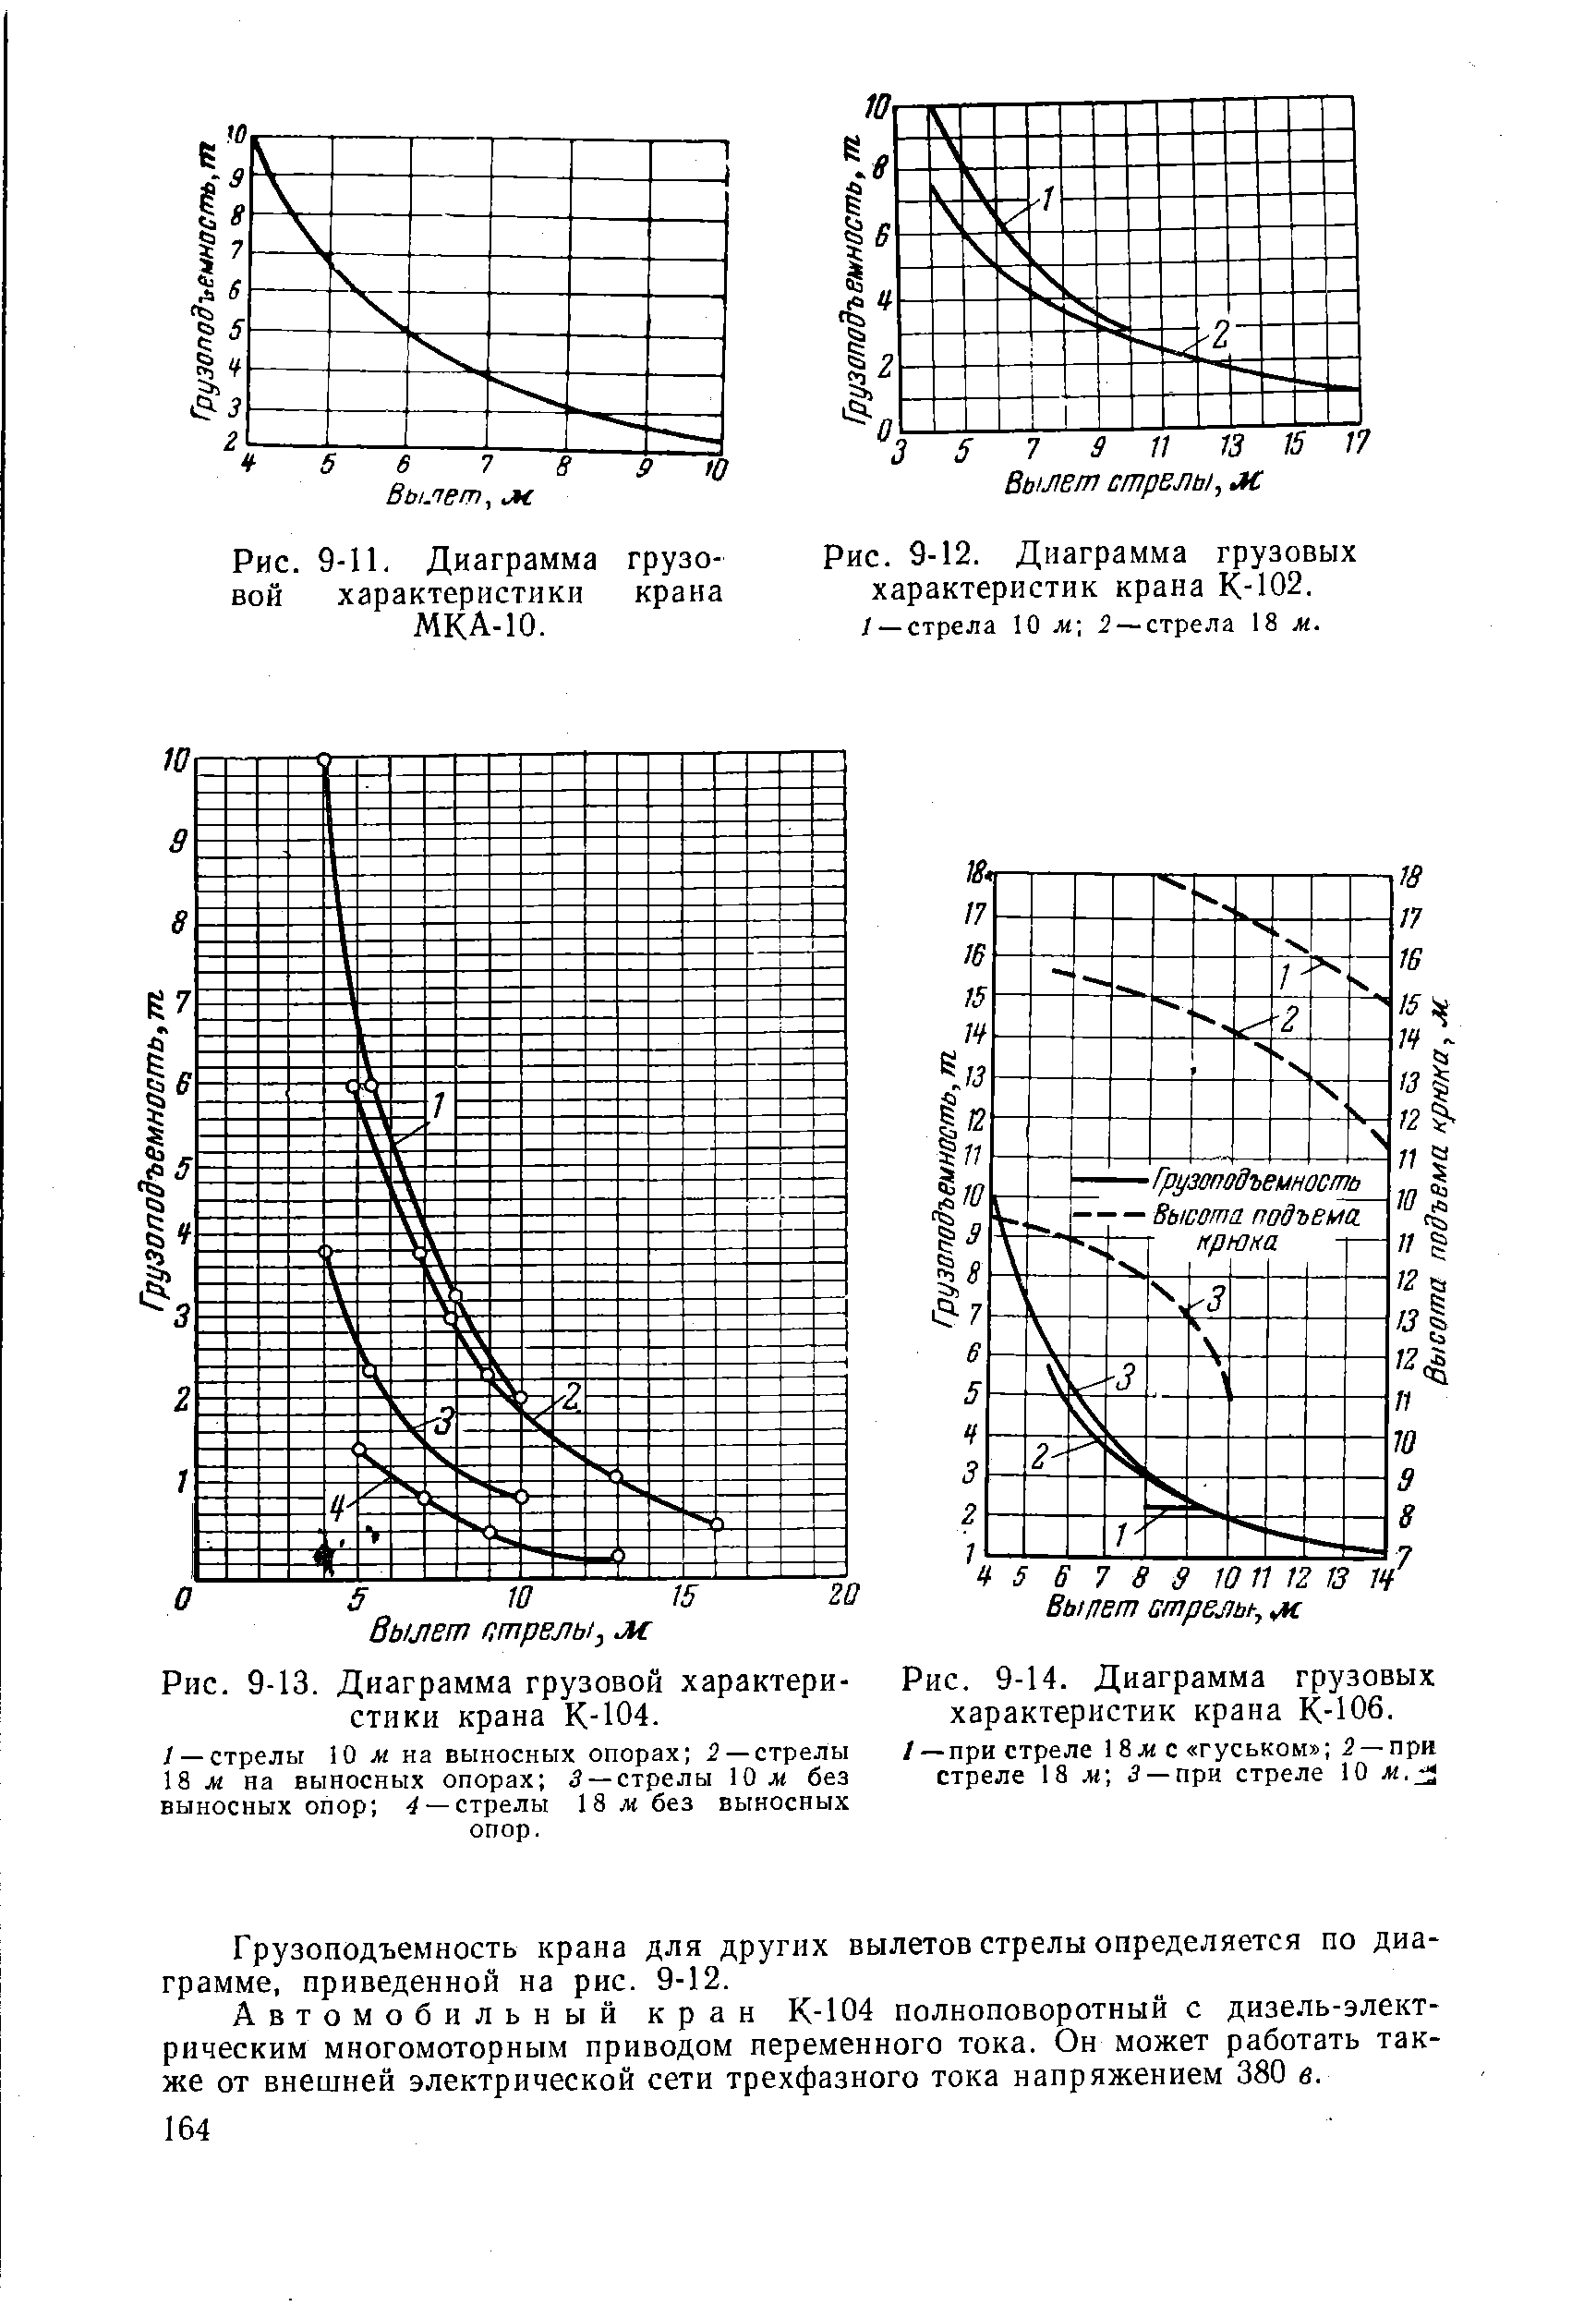 Рис. 9-12. Диаграмма <a href="/info/322212">грузовых характеристик</a> крана К-Ю2.
